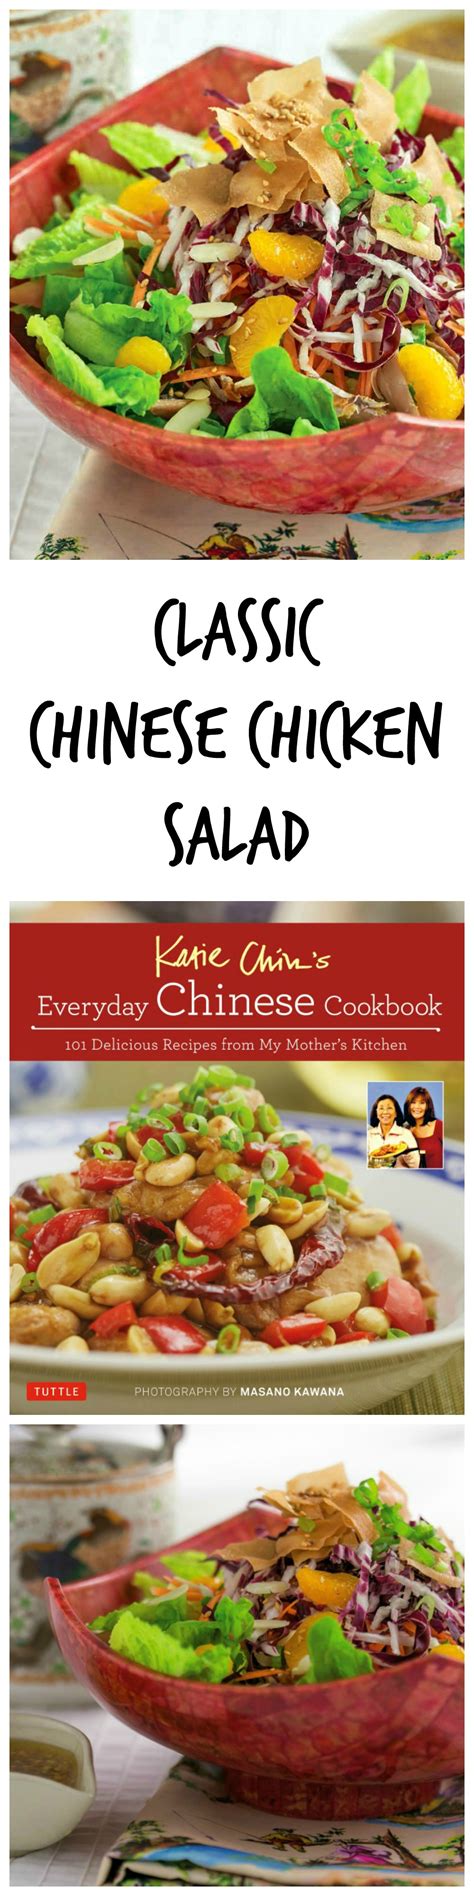 classic chinese chicken salad recipe chef katie chin s authentic chinese chicken salad from